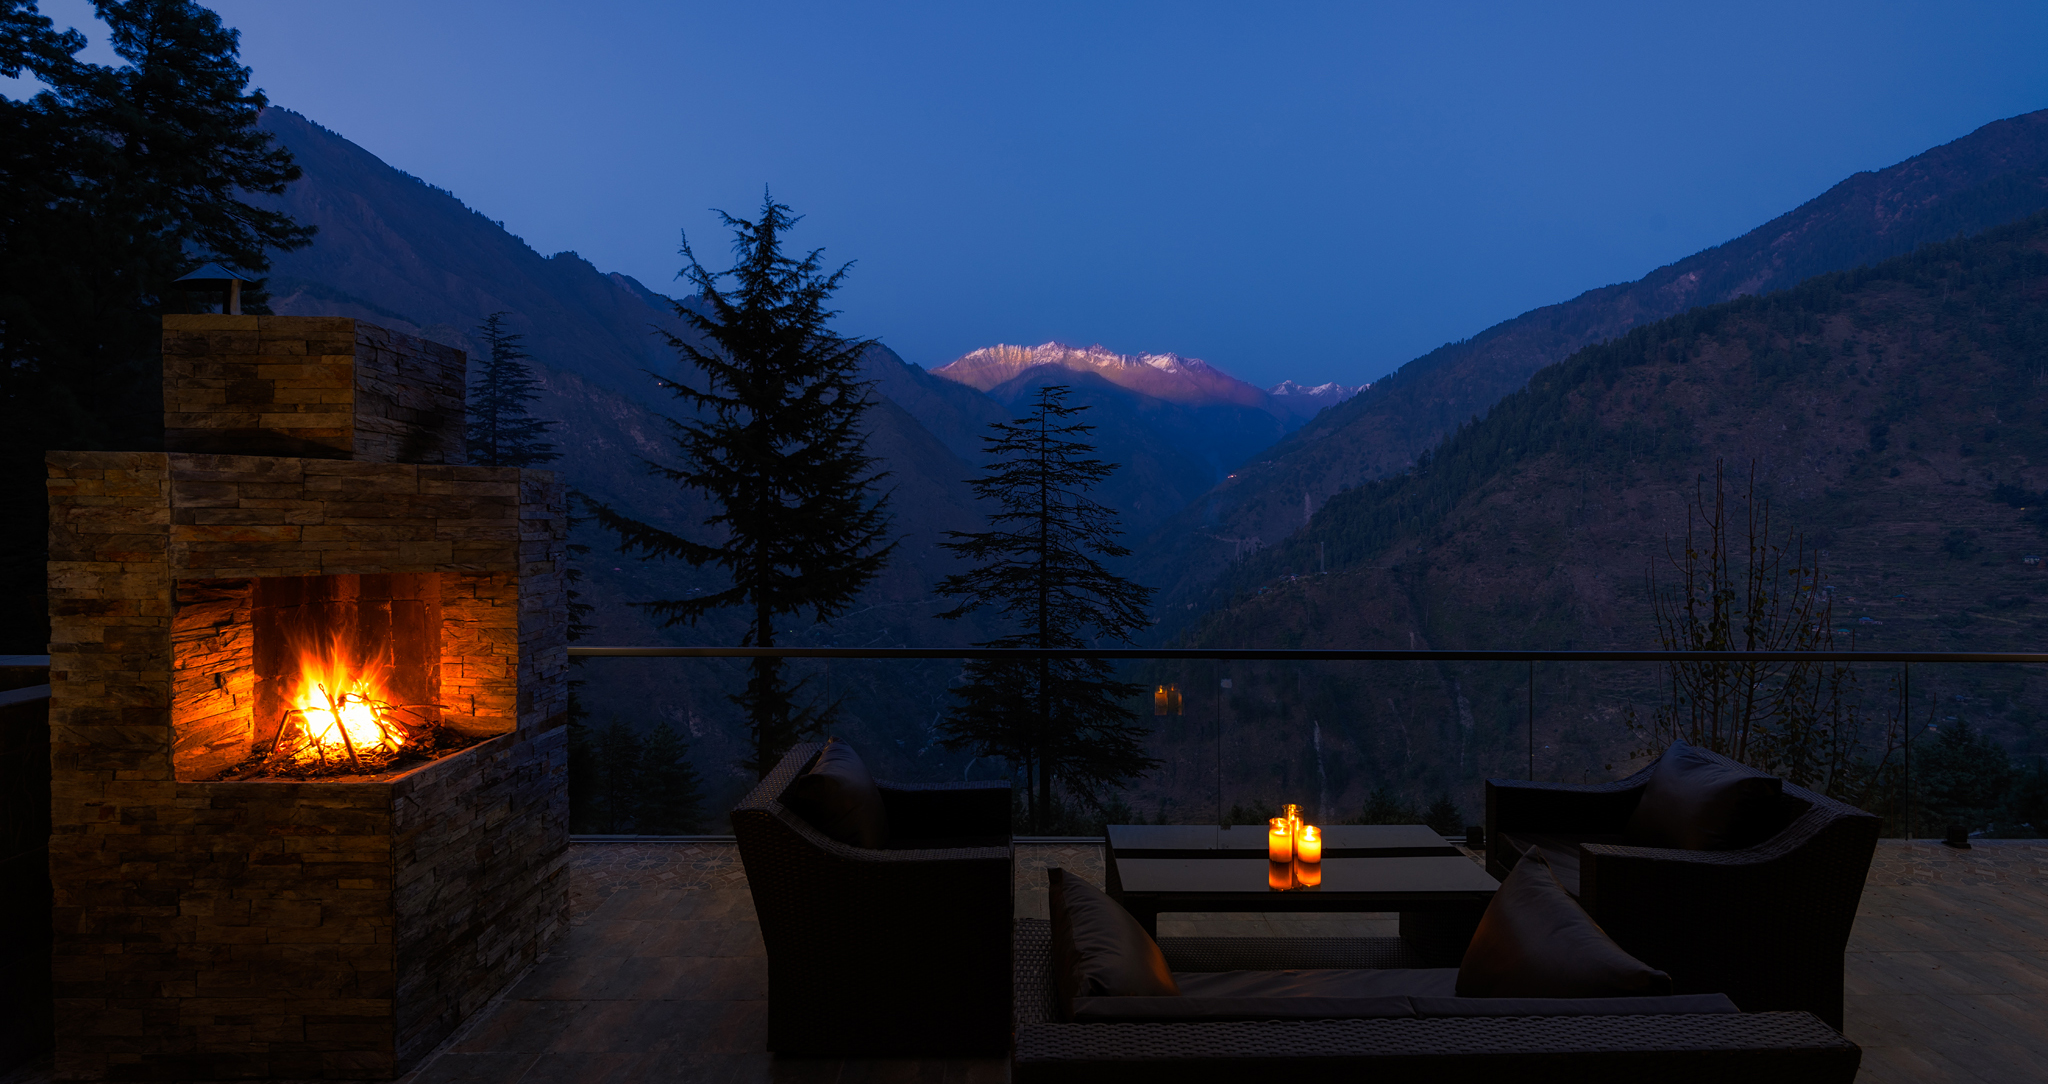 Twilight at The Hill Station, Tirthan Valley, Himachal Pradesh